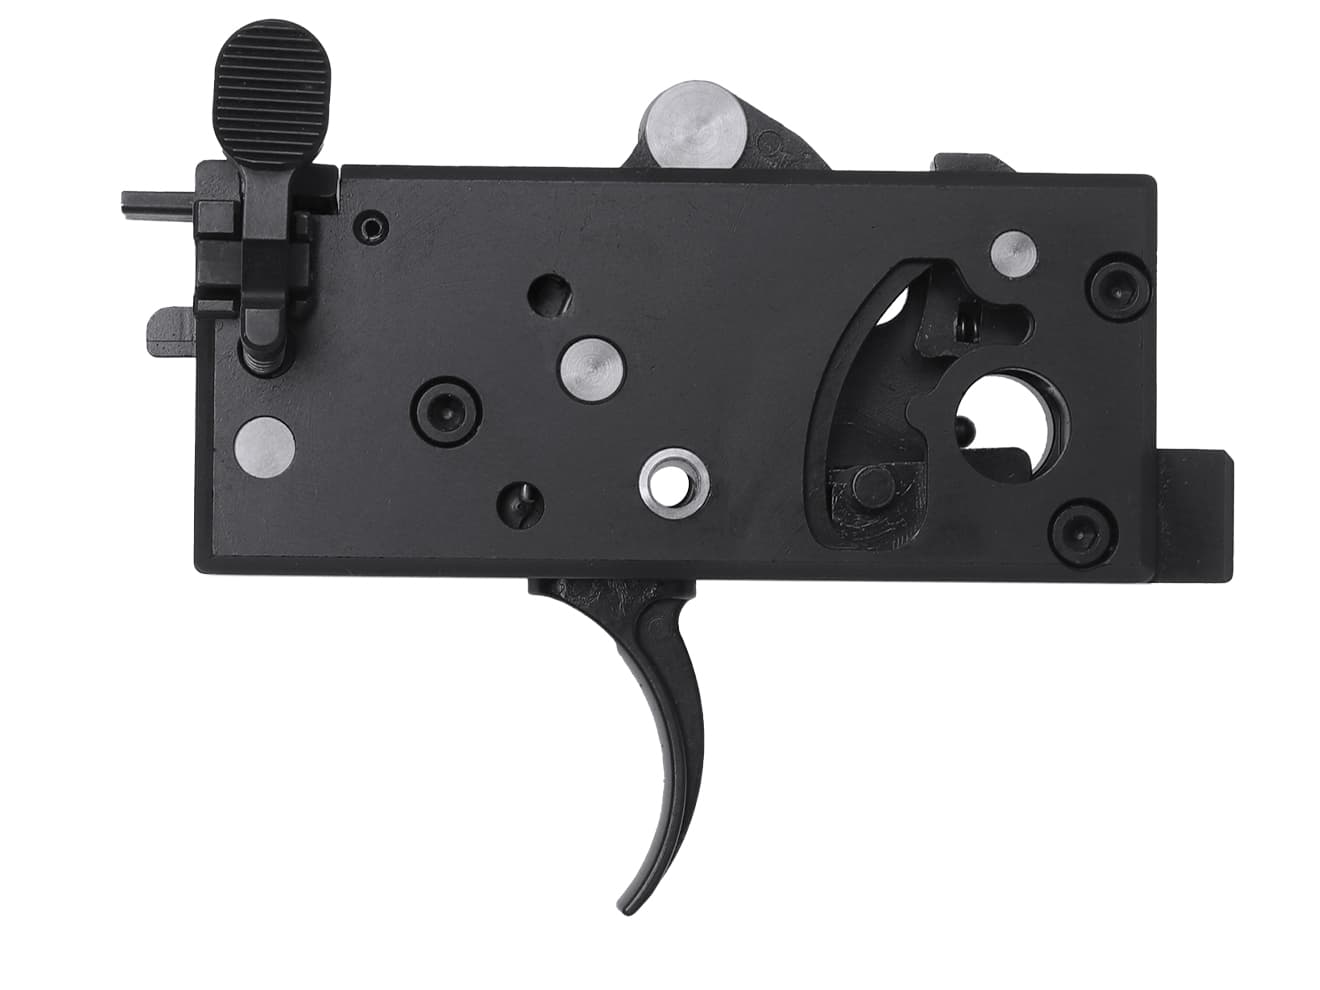 GM0509 Guns Modify スチールCNCトリガーボックス + MIM スチール